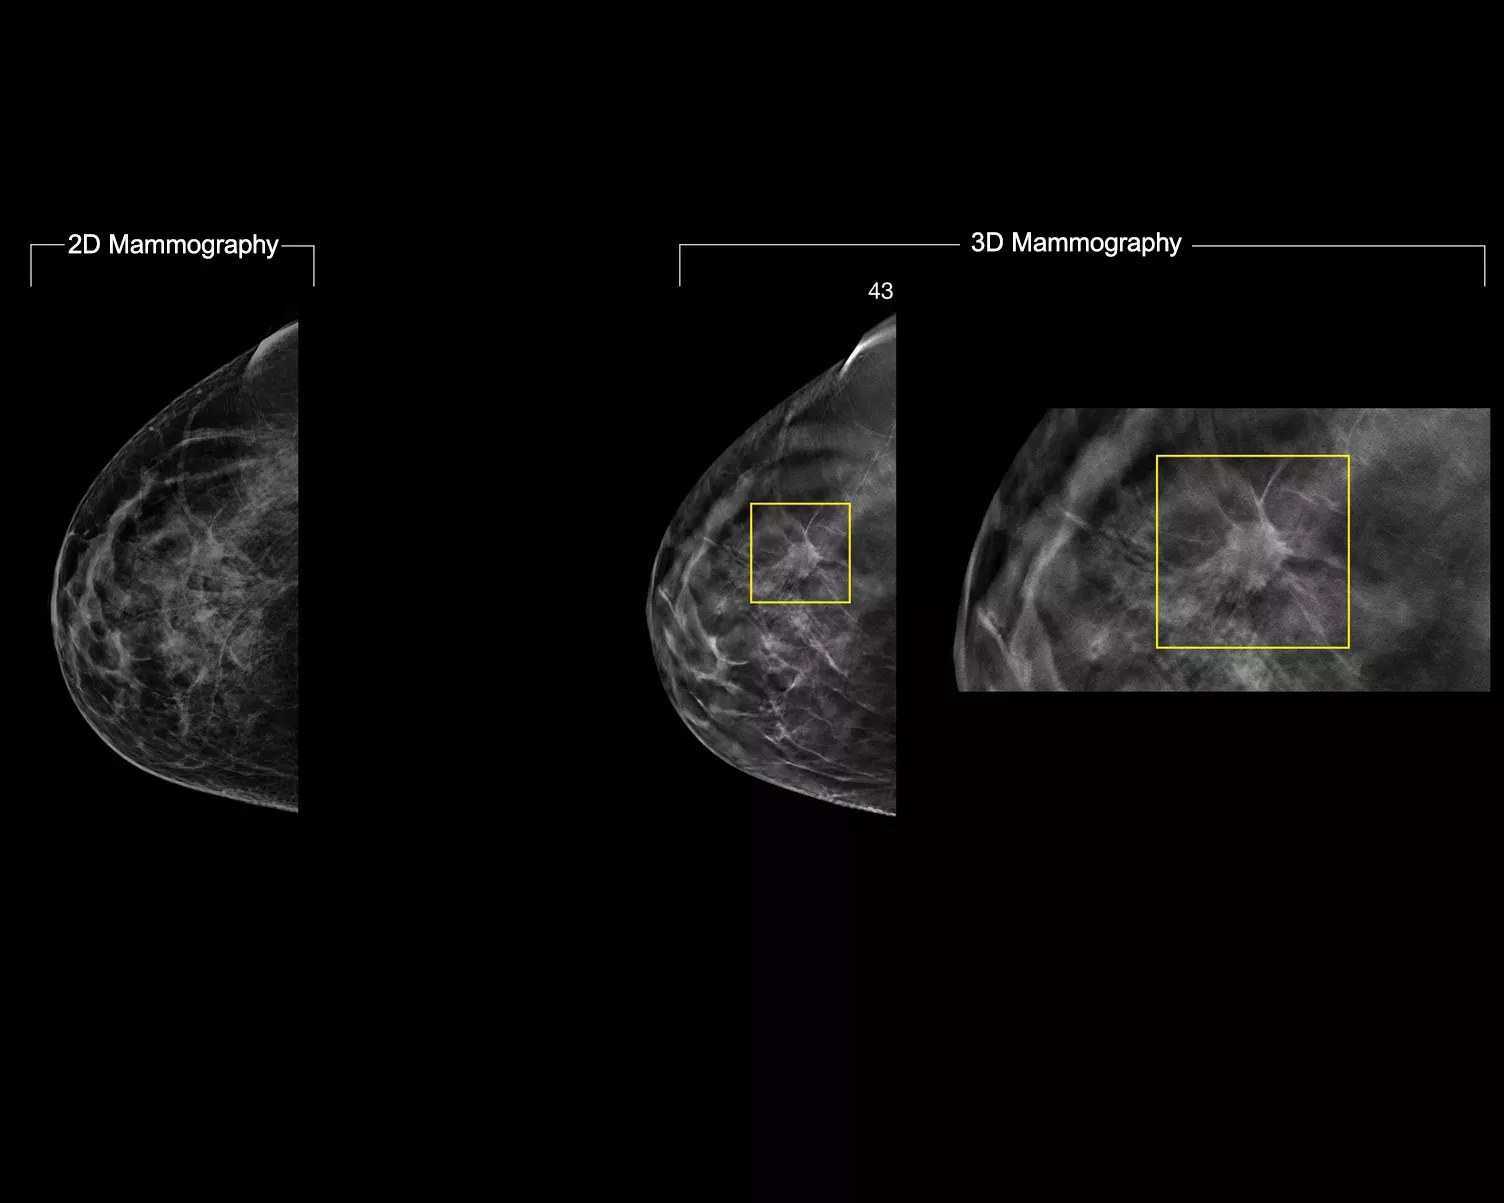 Breast screening image